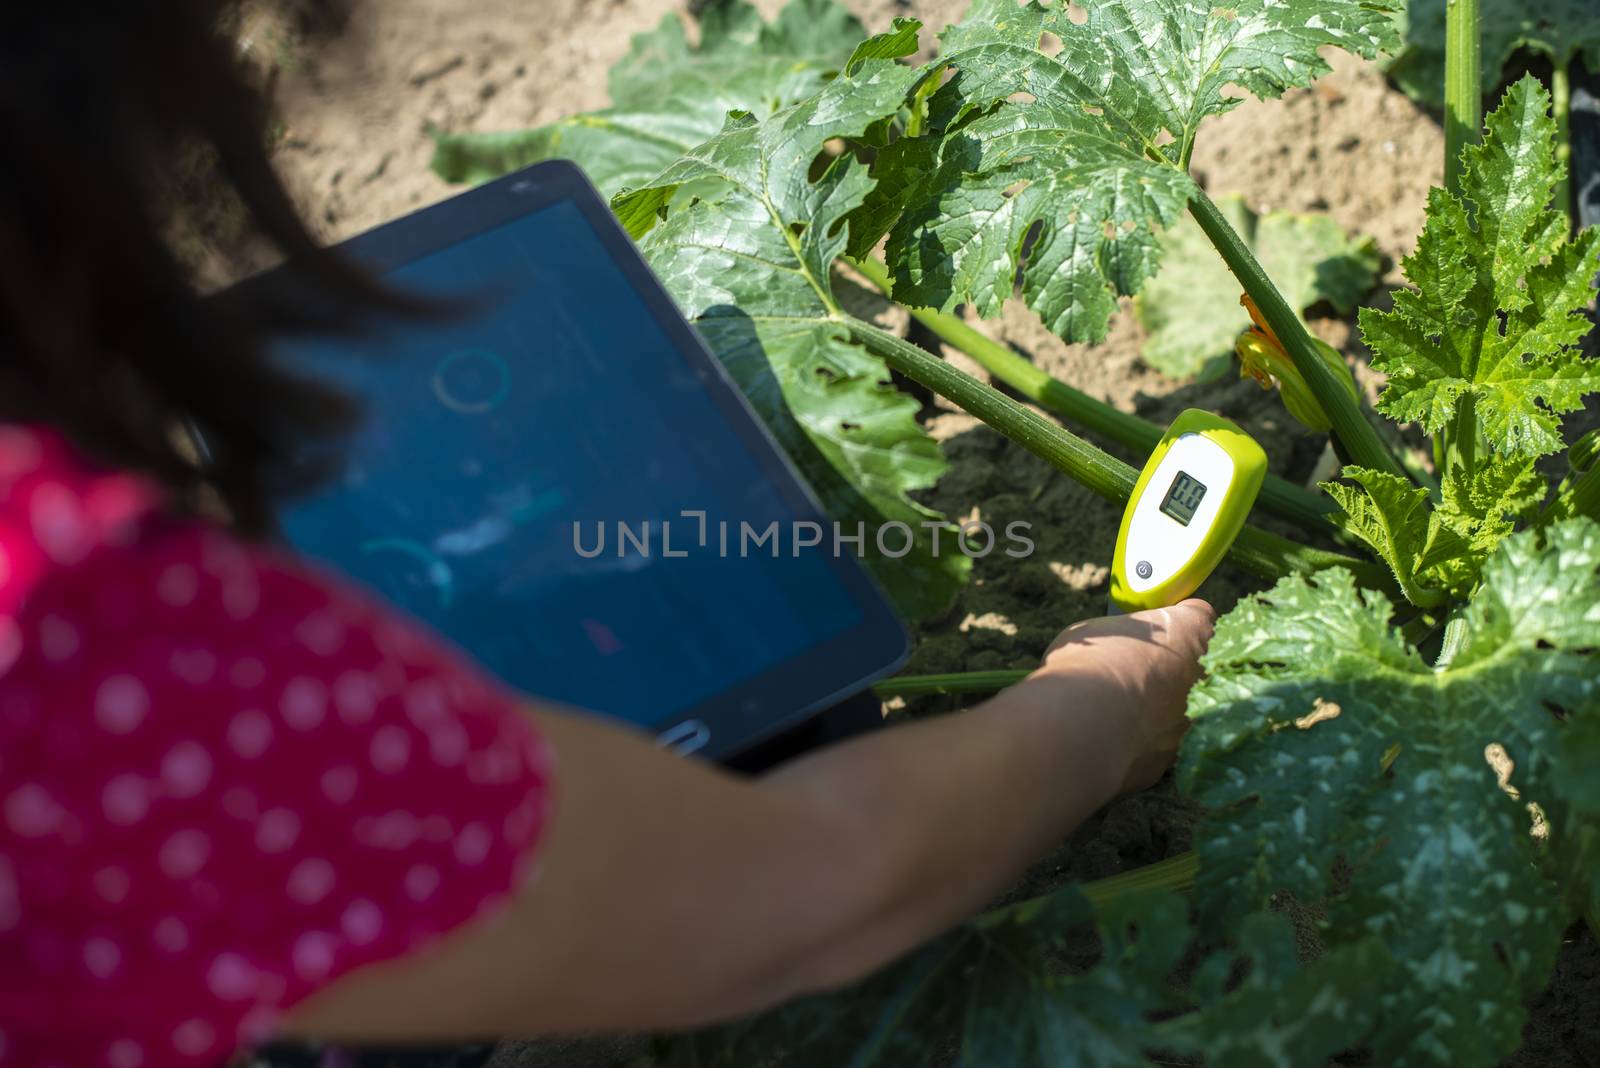 Farmer measure soil in Zucchini plantation. Soil measure device  by deyan_georgiev